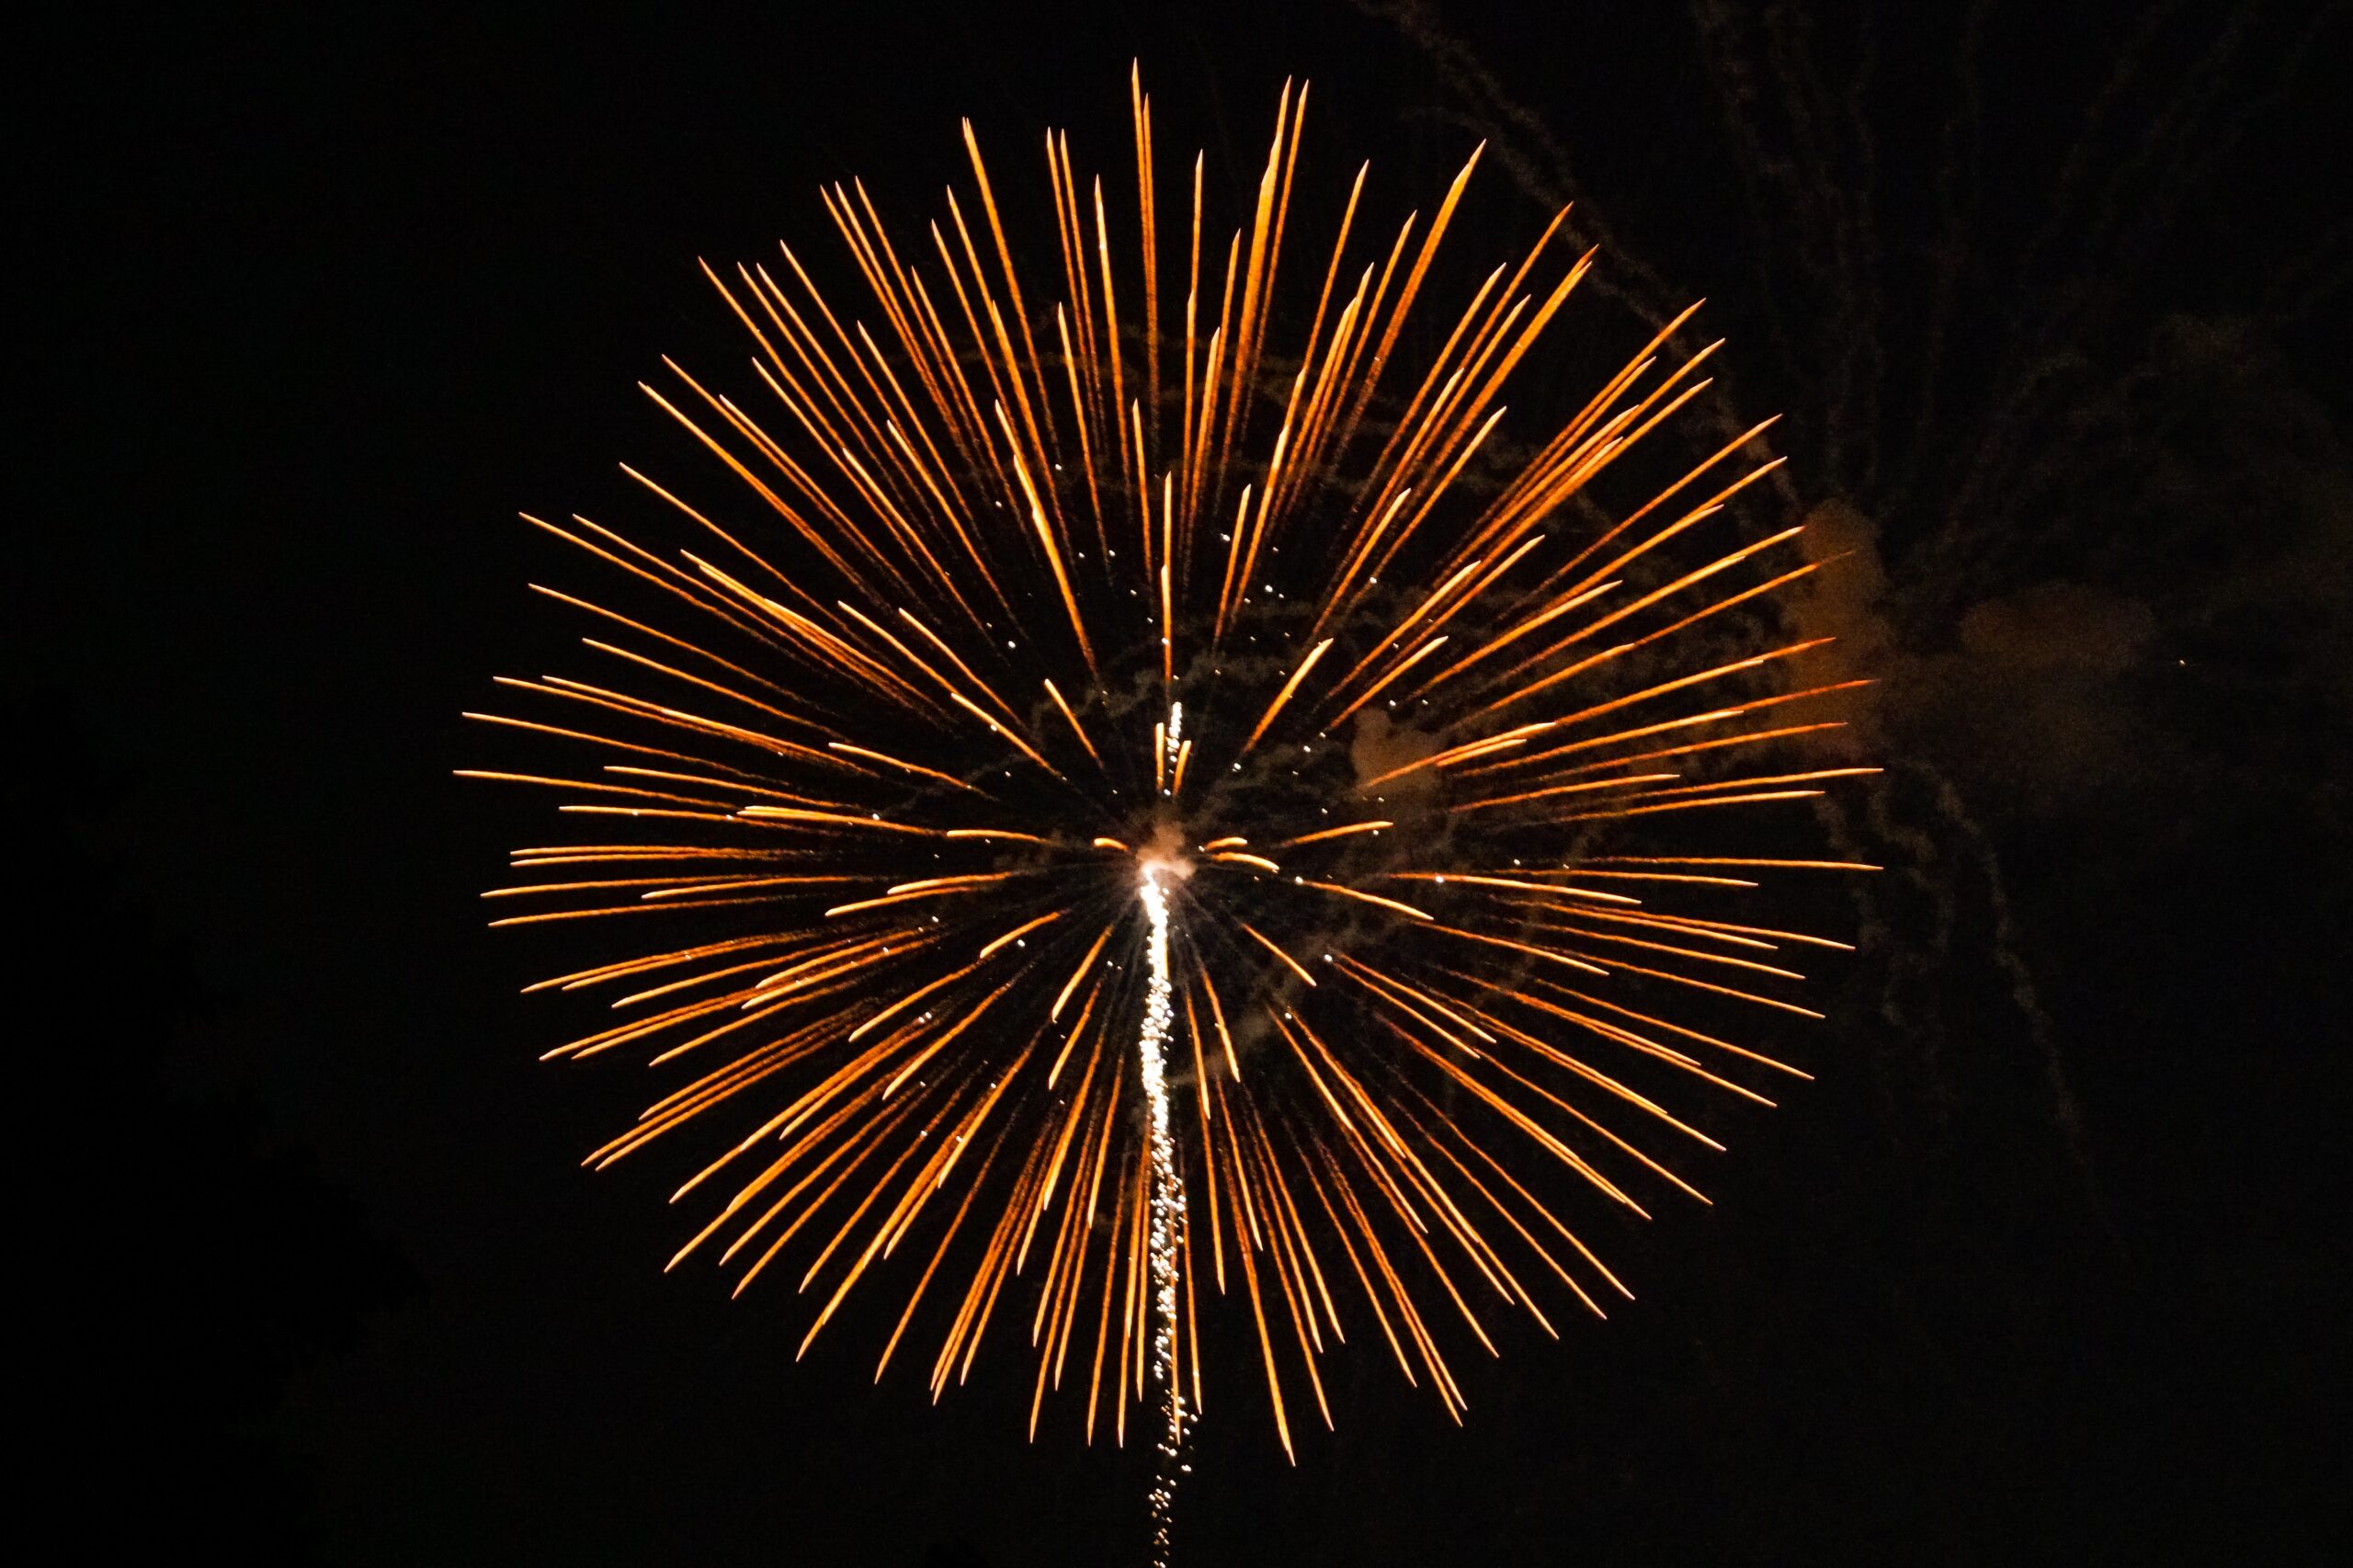 Firework rocket explosion in the night sky